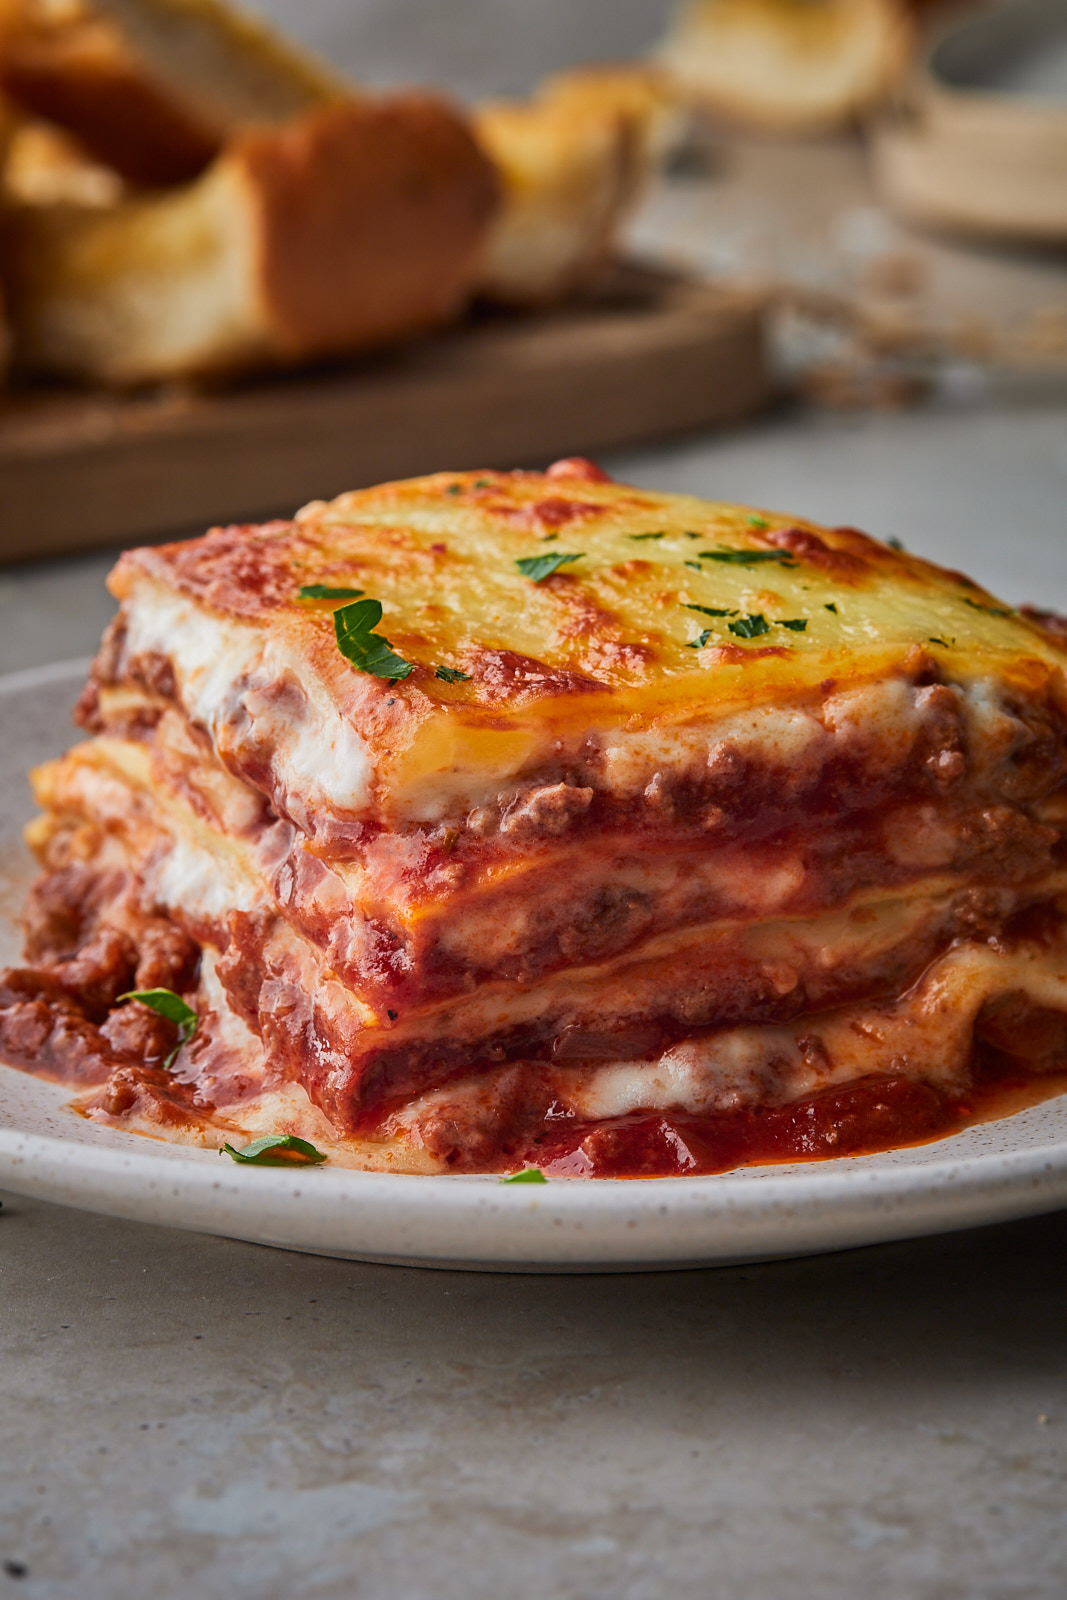 Classic Lasagna Bolognese Recipe